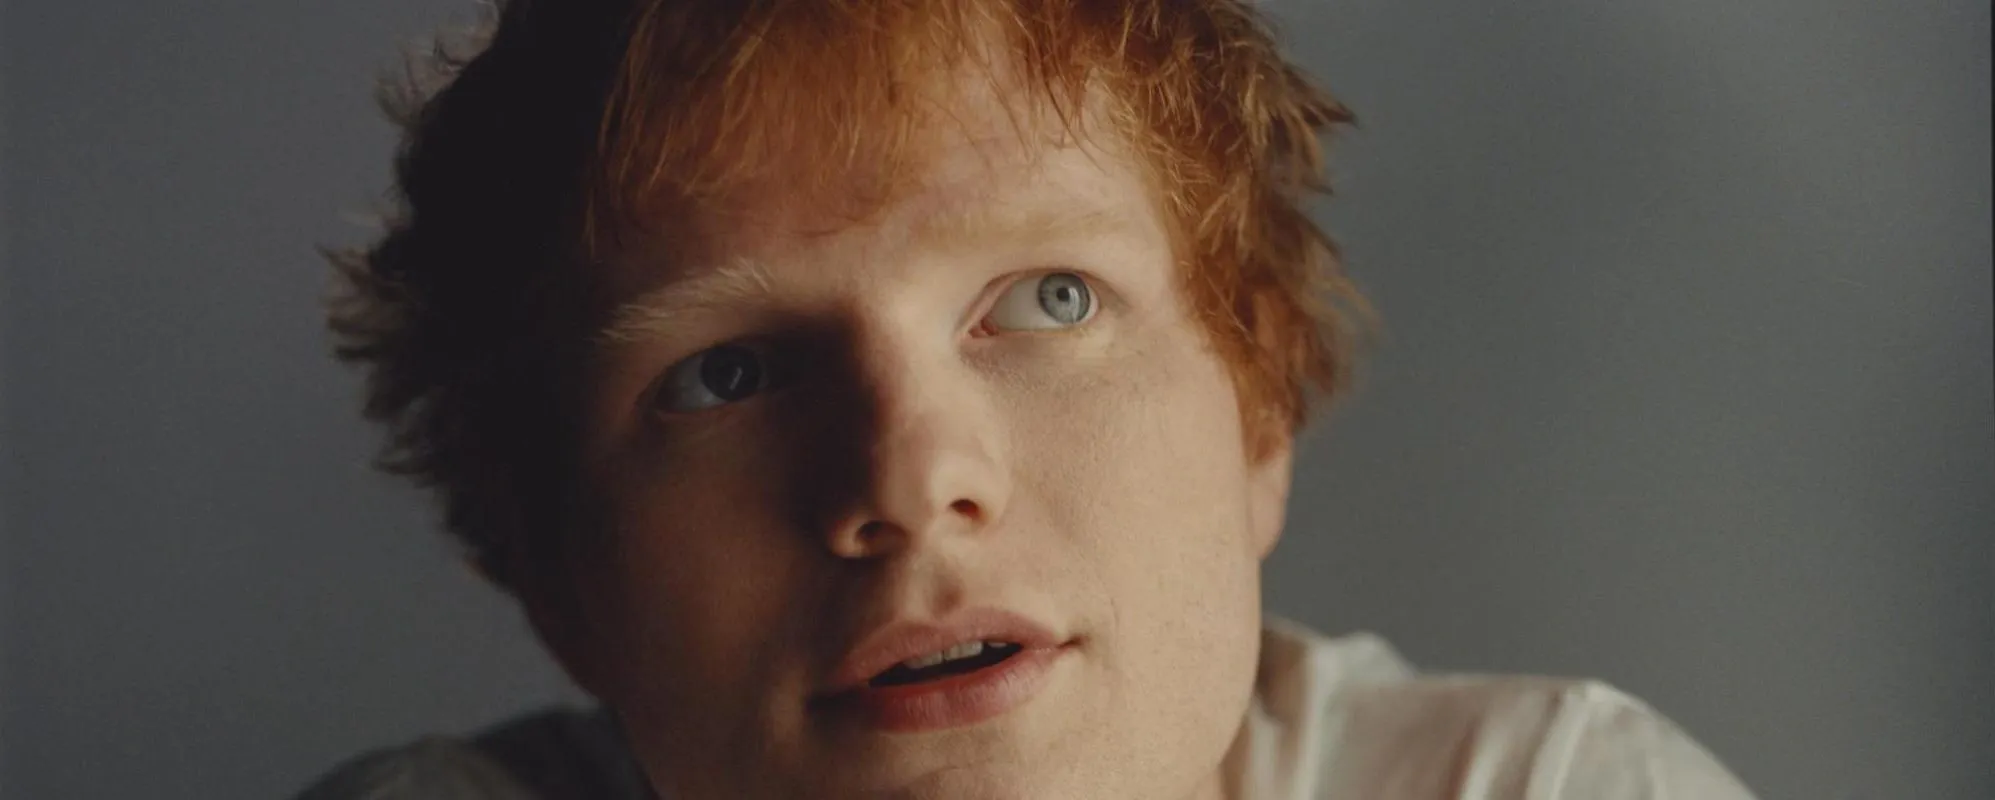 Behind the Song Lyrics: “Thinking Out Loud” by Ed Sheeran